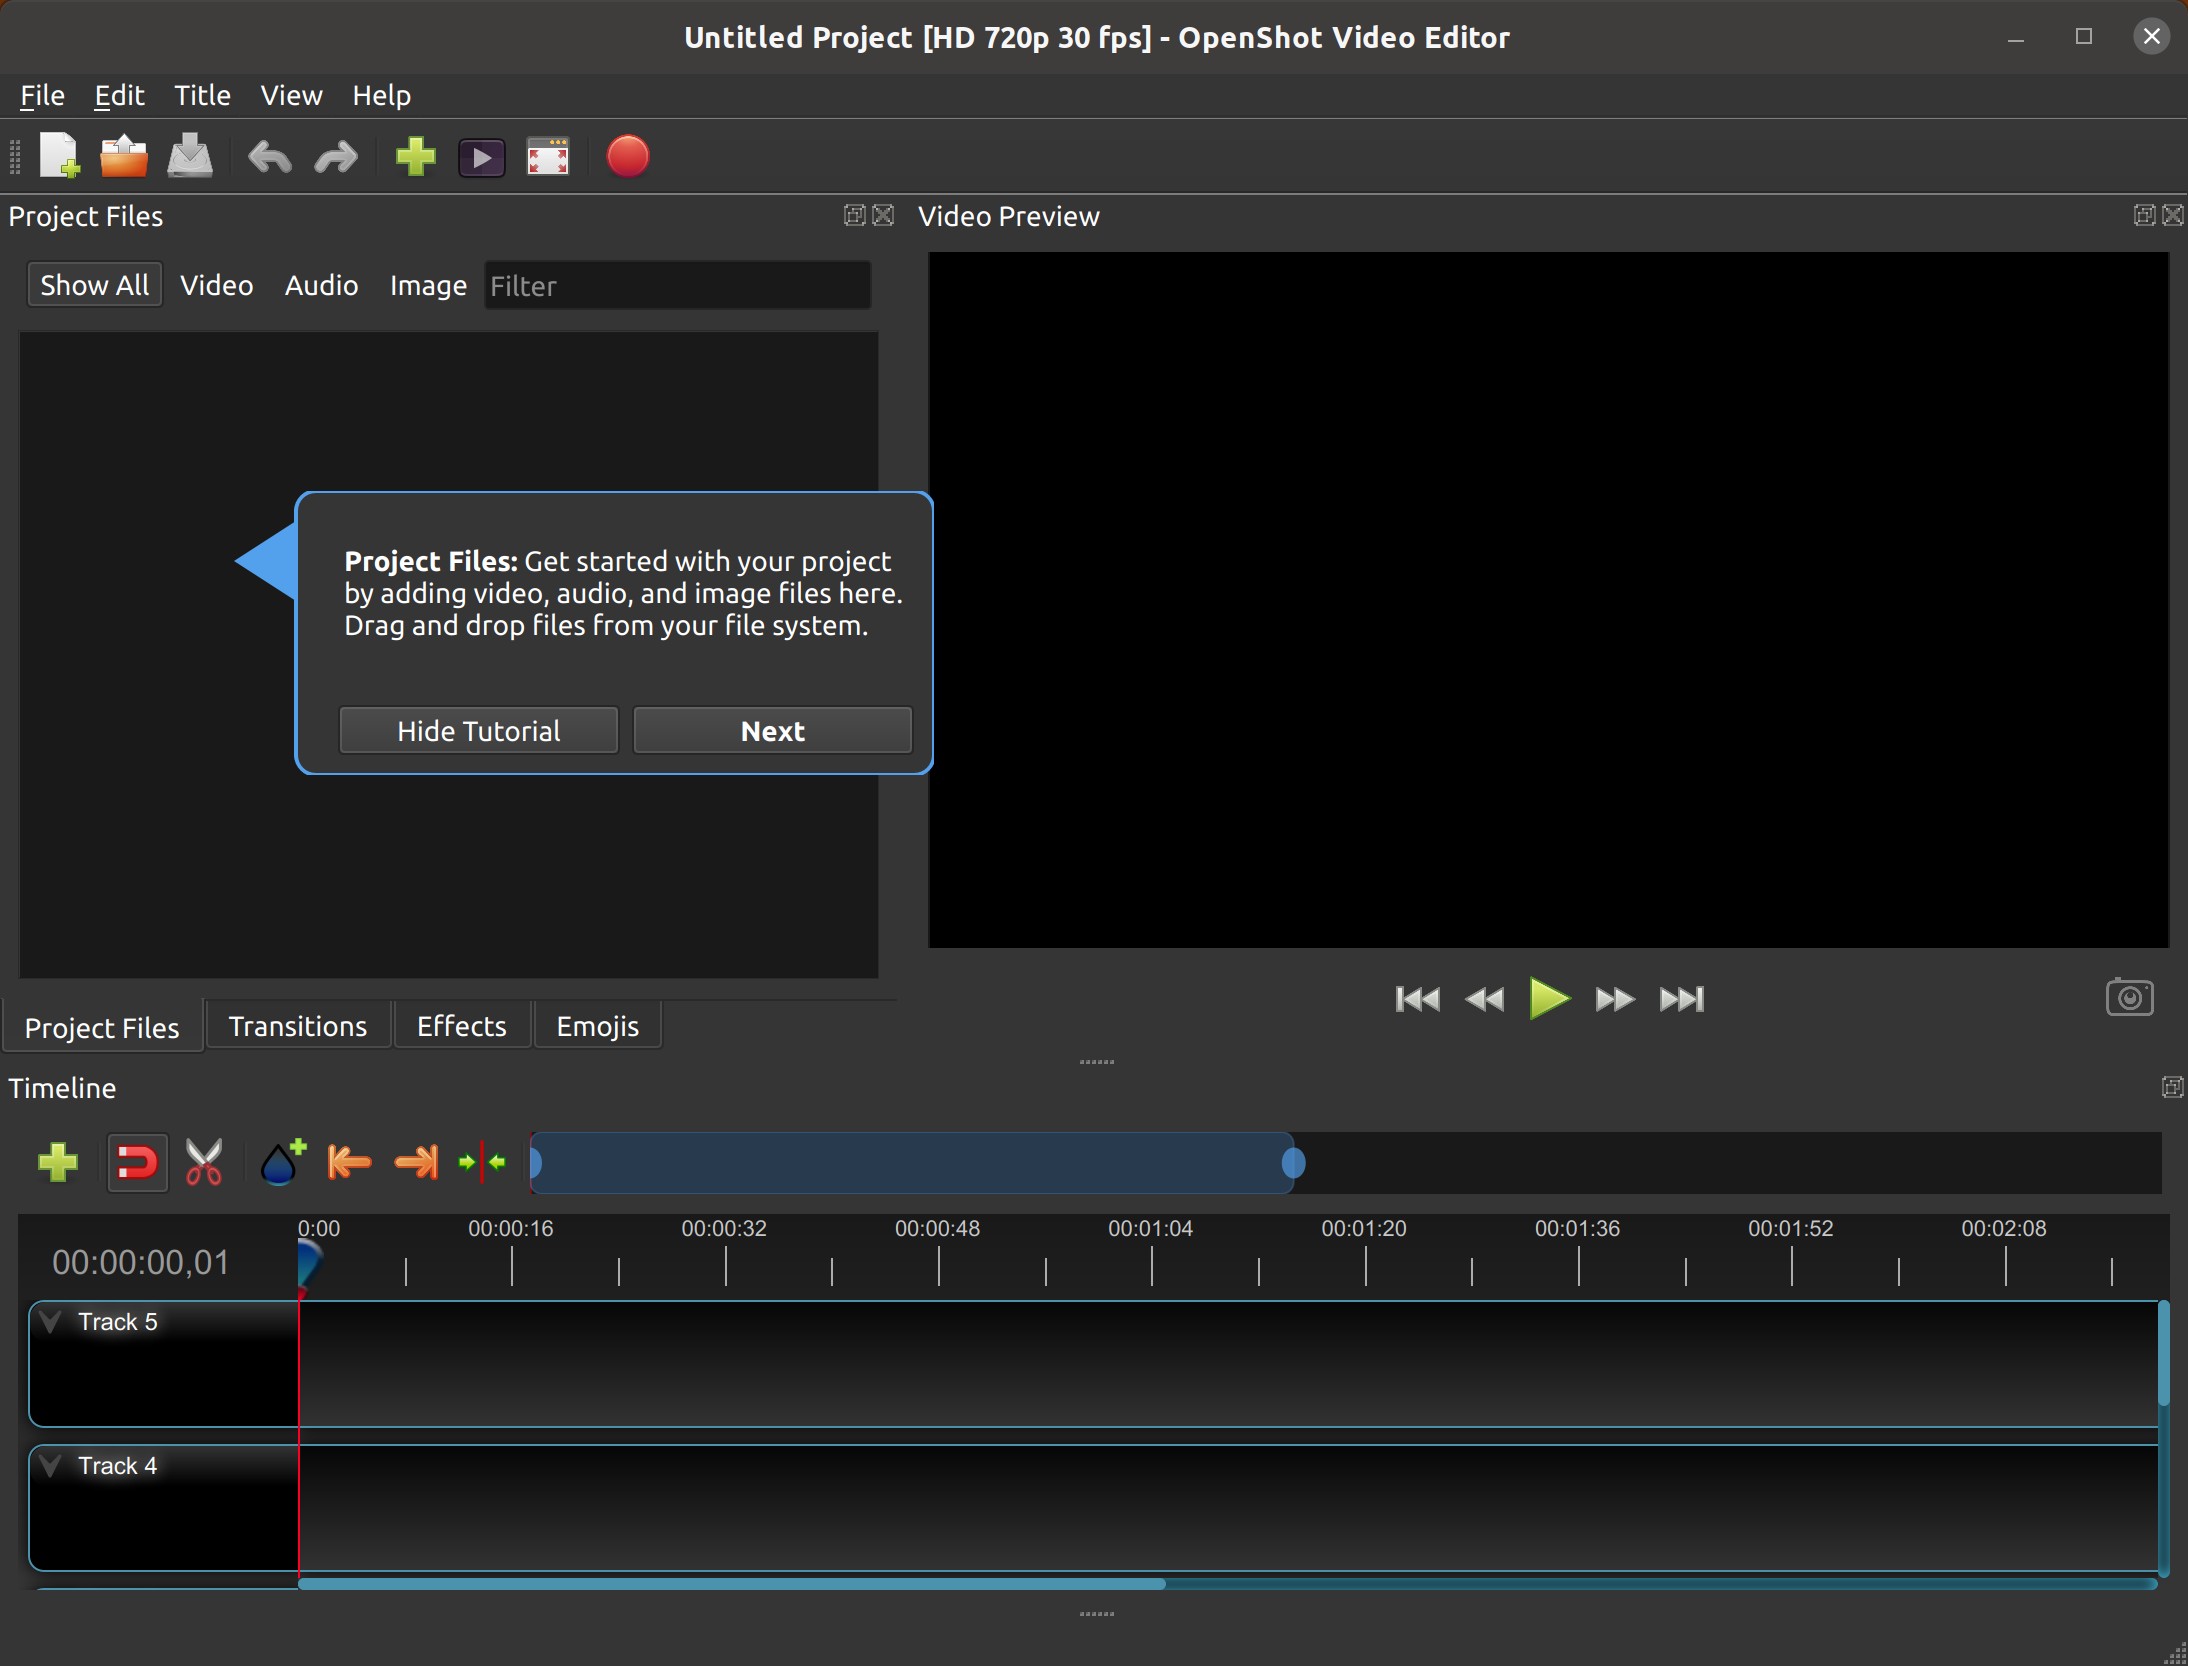 openshot video editor tracks merge